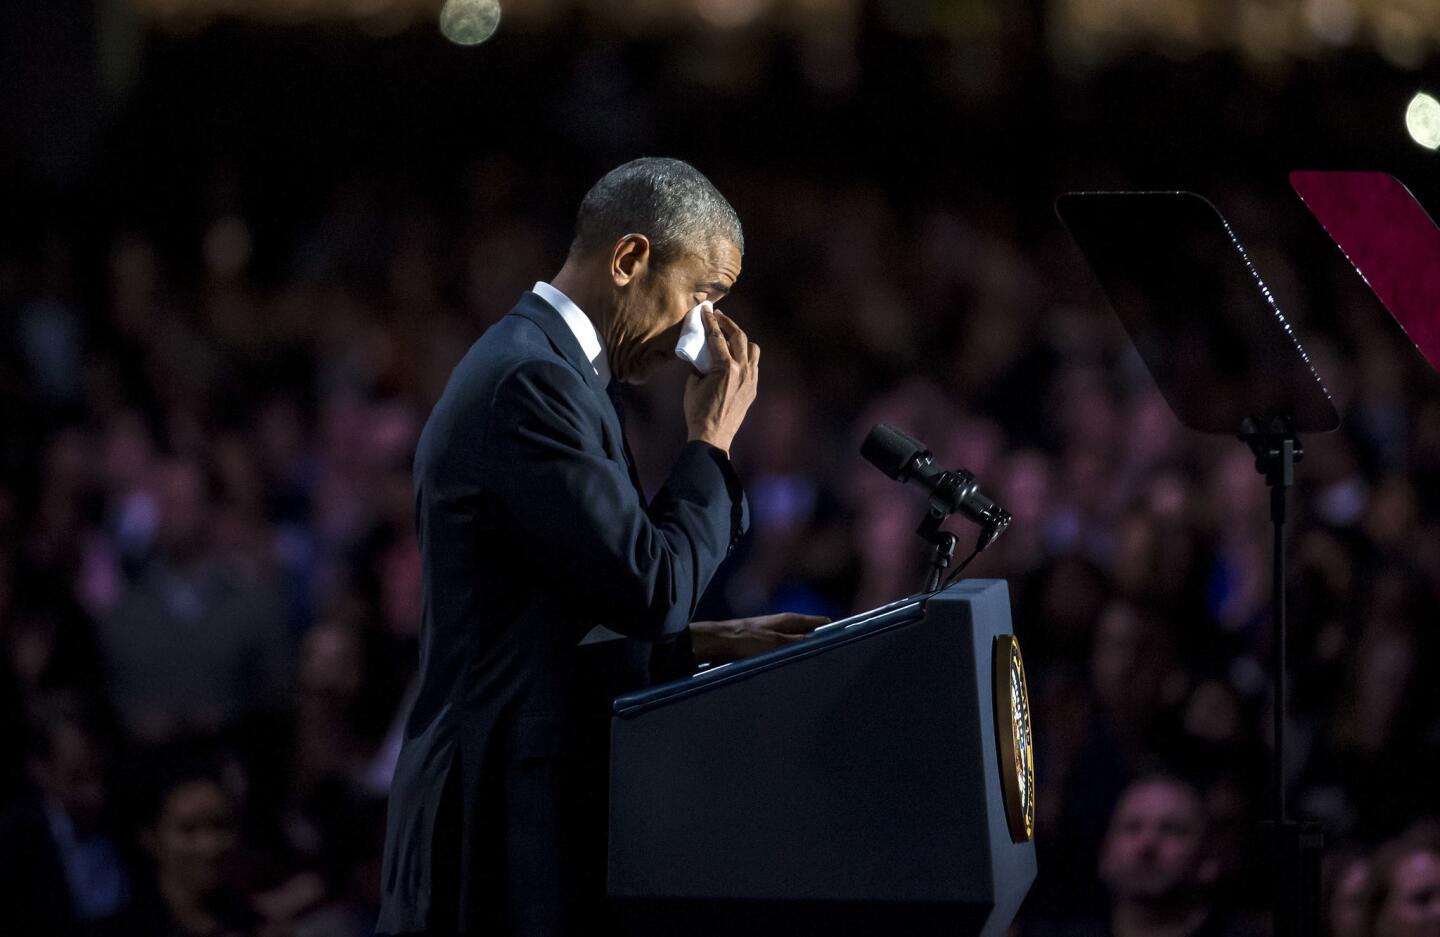 President Obama's farewell address